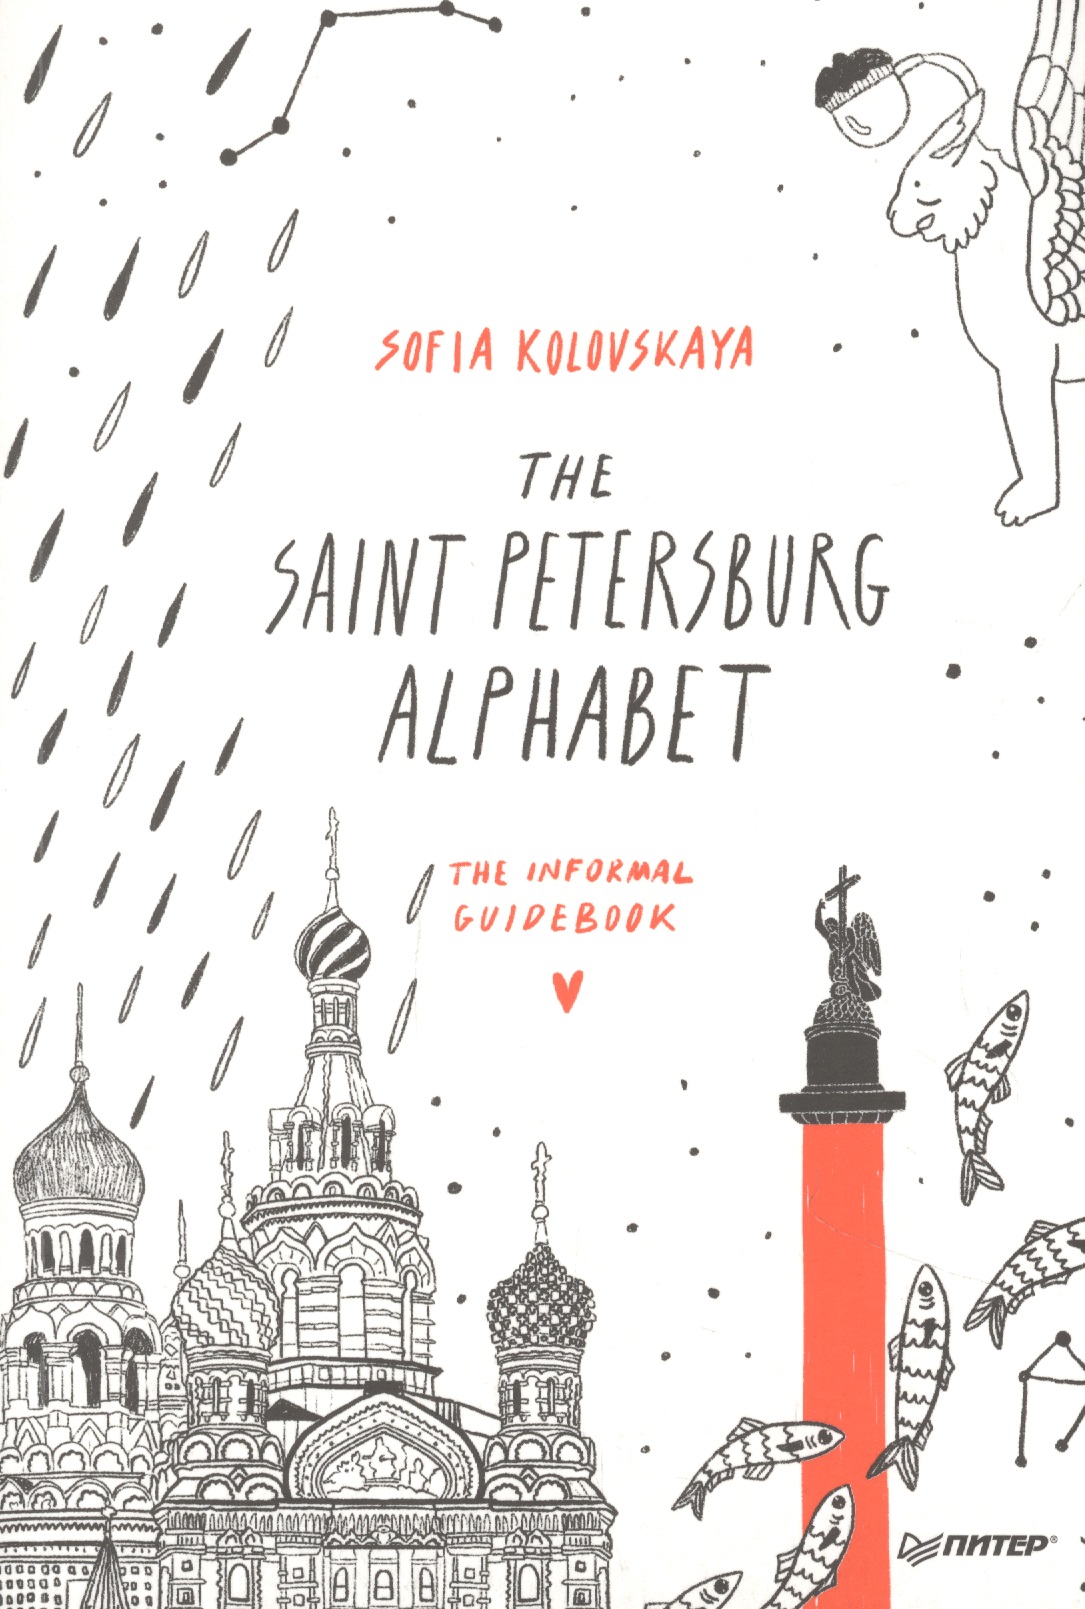 saint petersburg for visitors Коловская С. З. The Saint Petersburg Alphabet. The informal guidebook